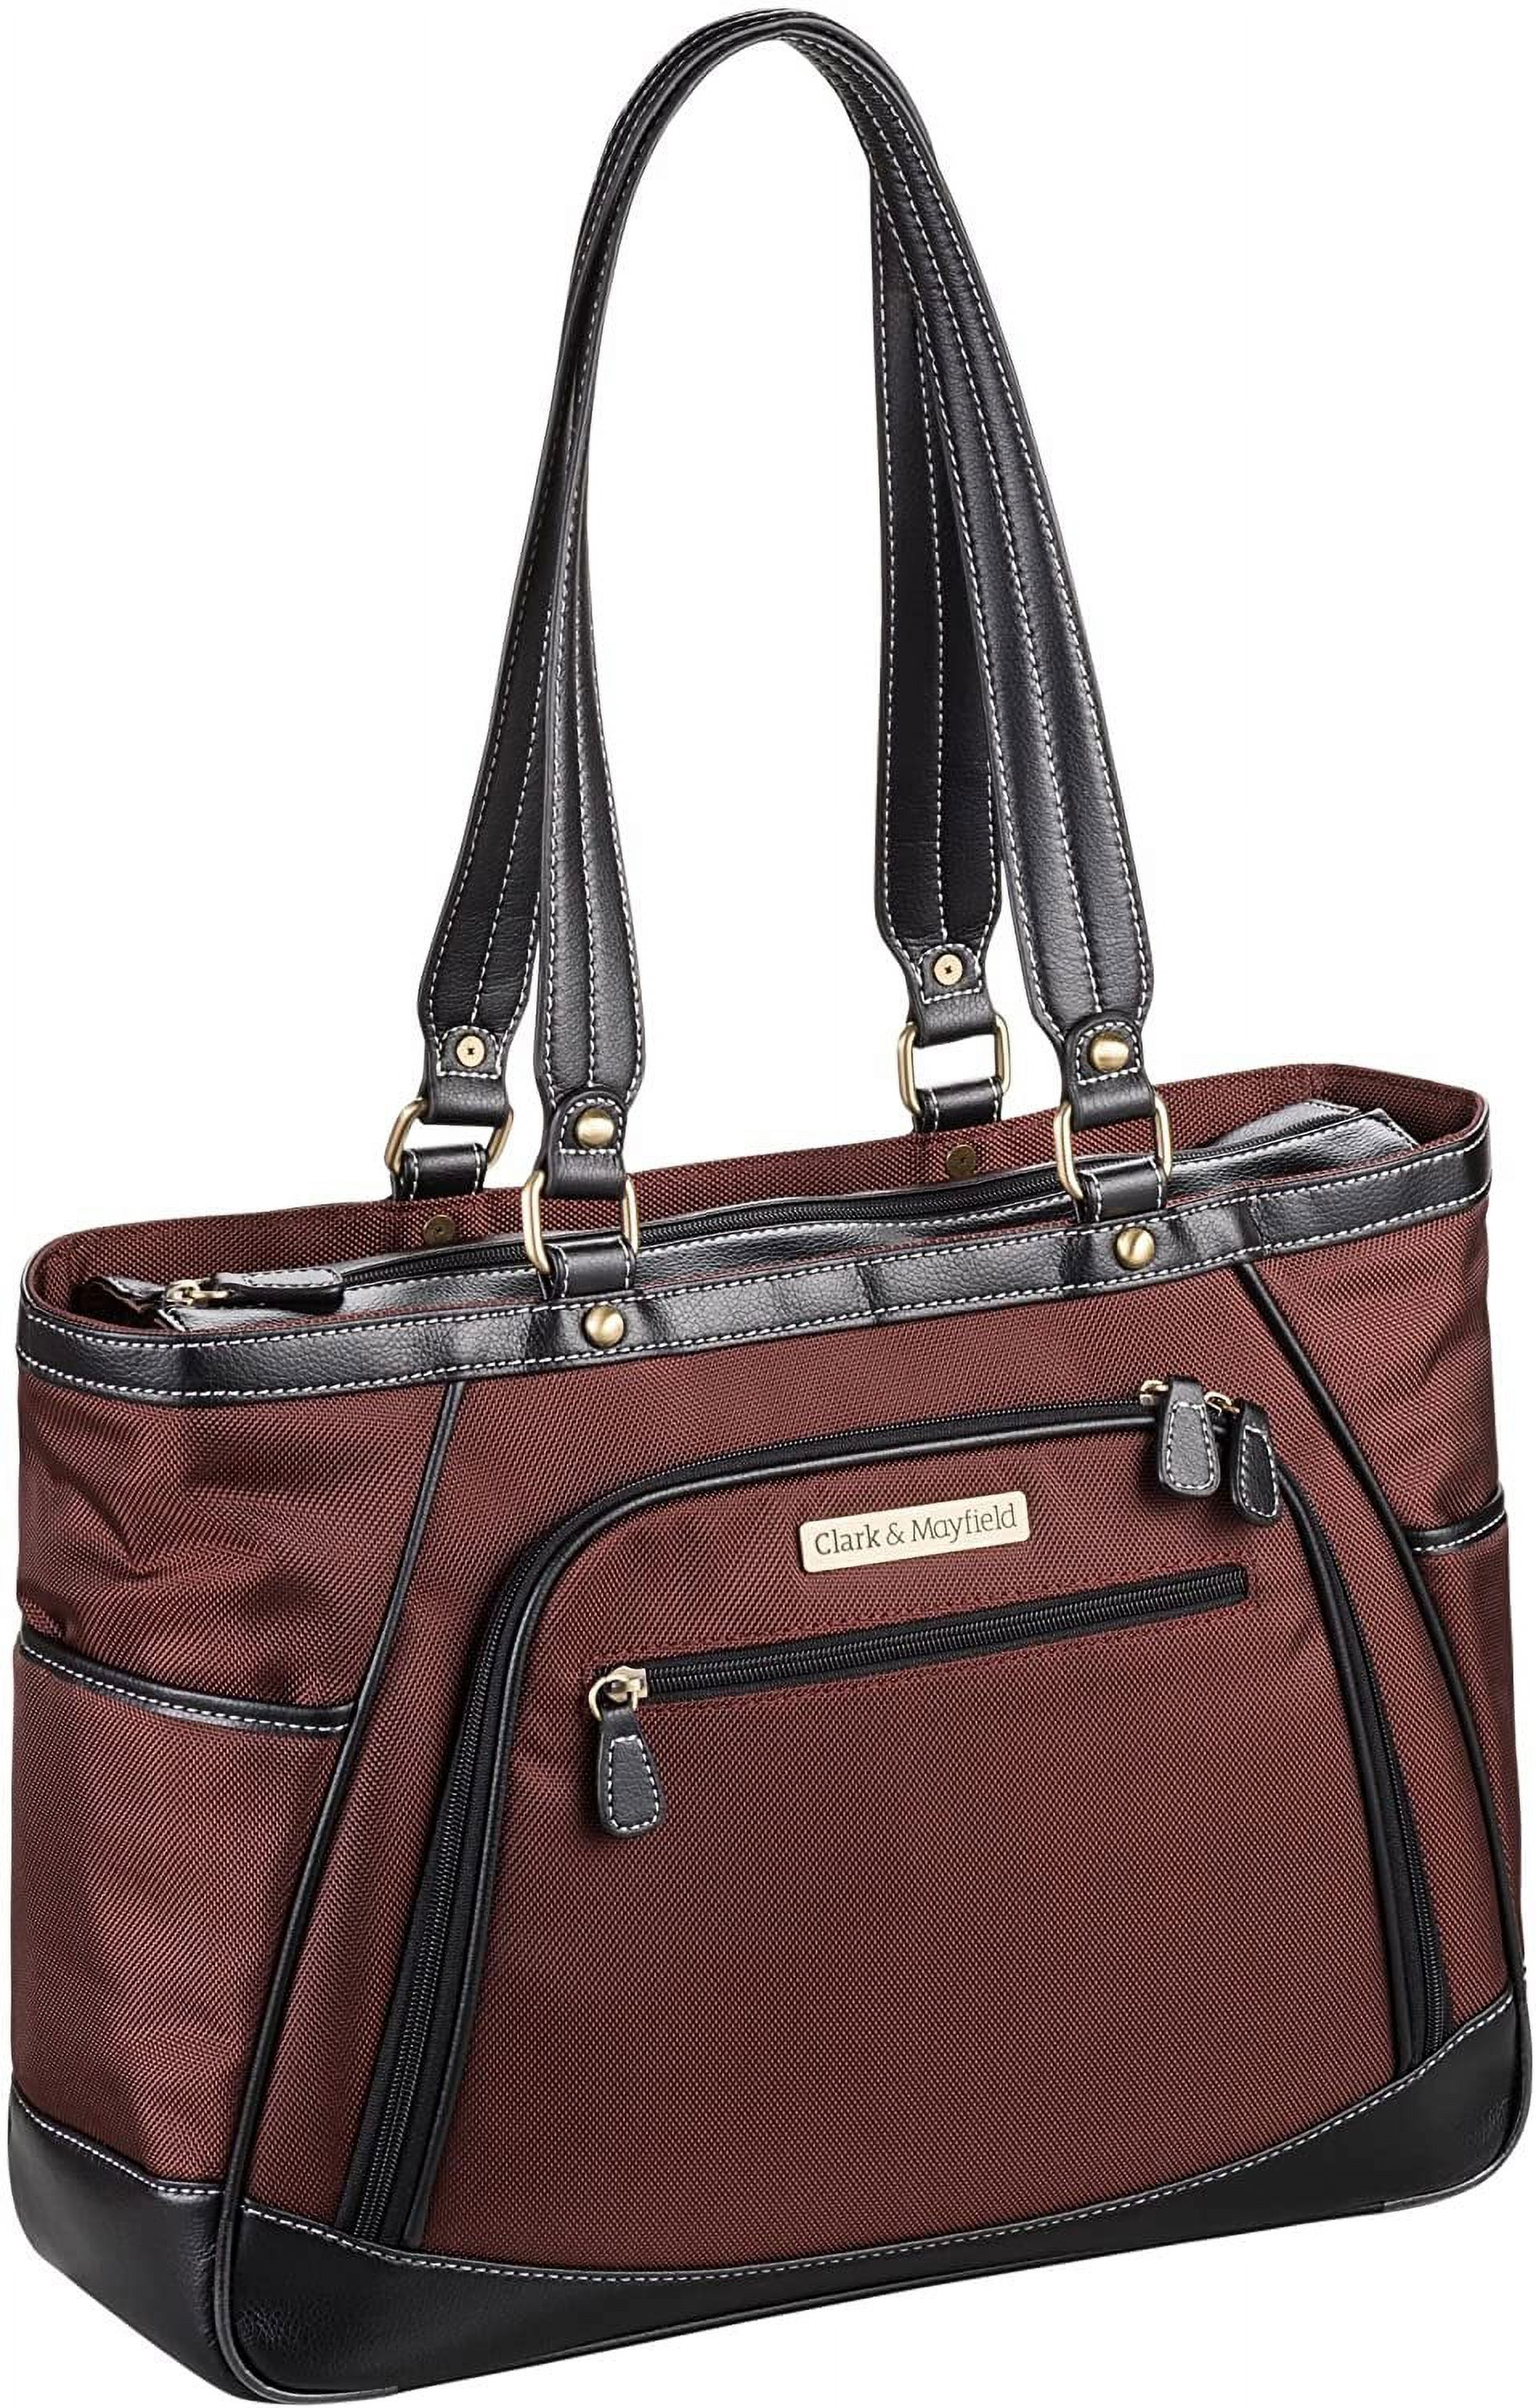 Clark & Mayfield Sellwood Metro Laptop Handbag 15.6" Bordeaux Brown - image 1 of 7